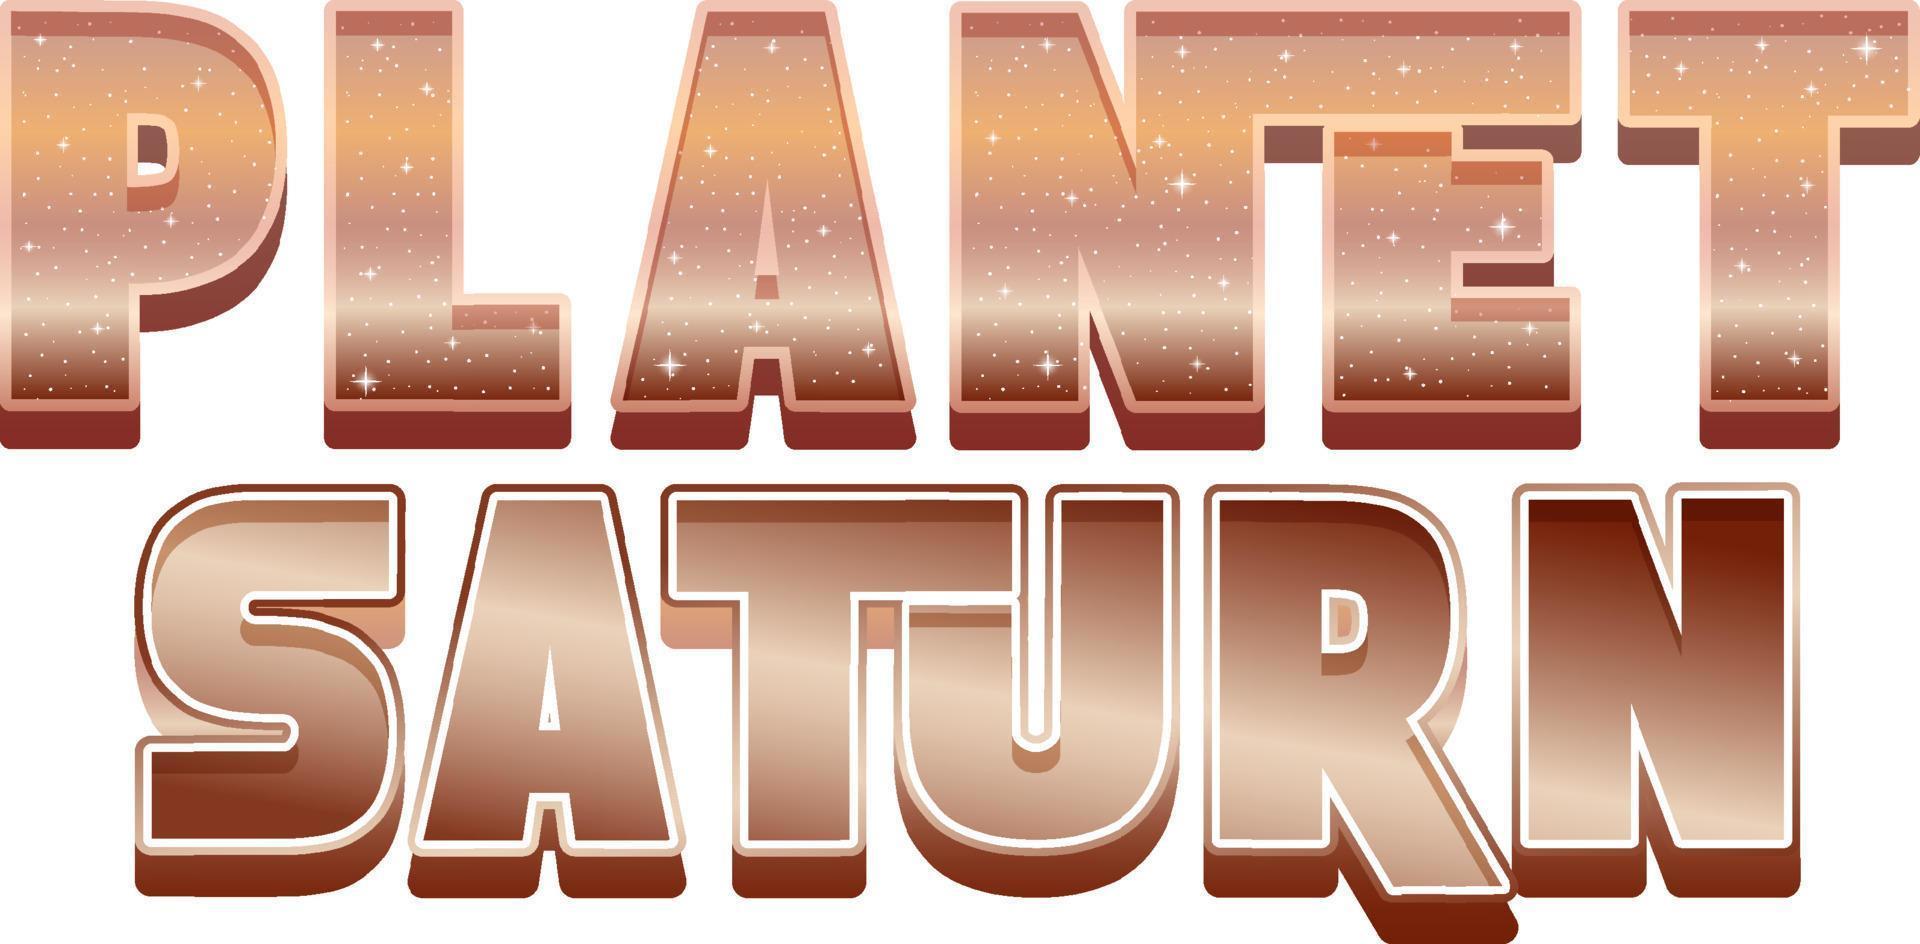 Planet Saturn word logo design vector